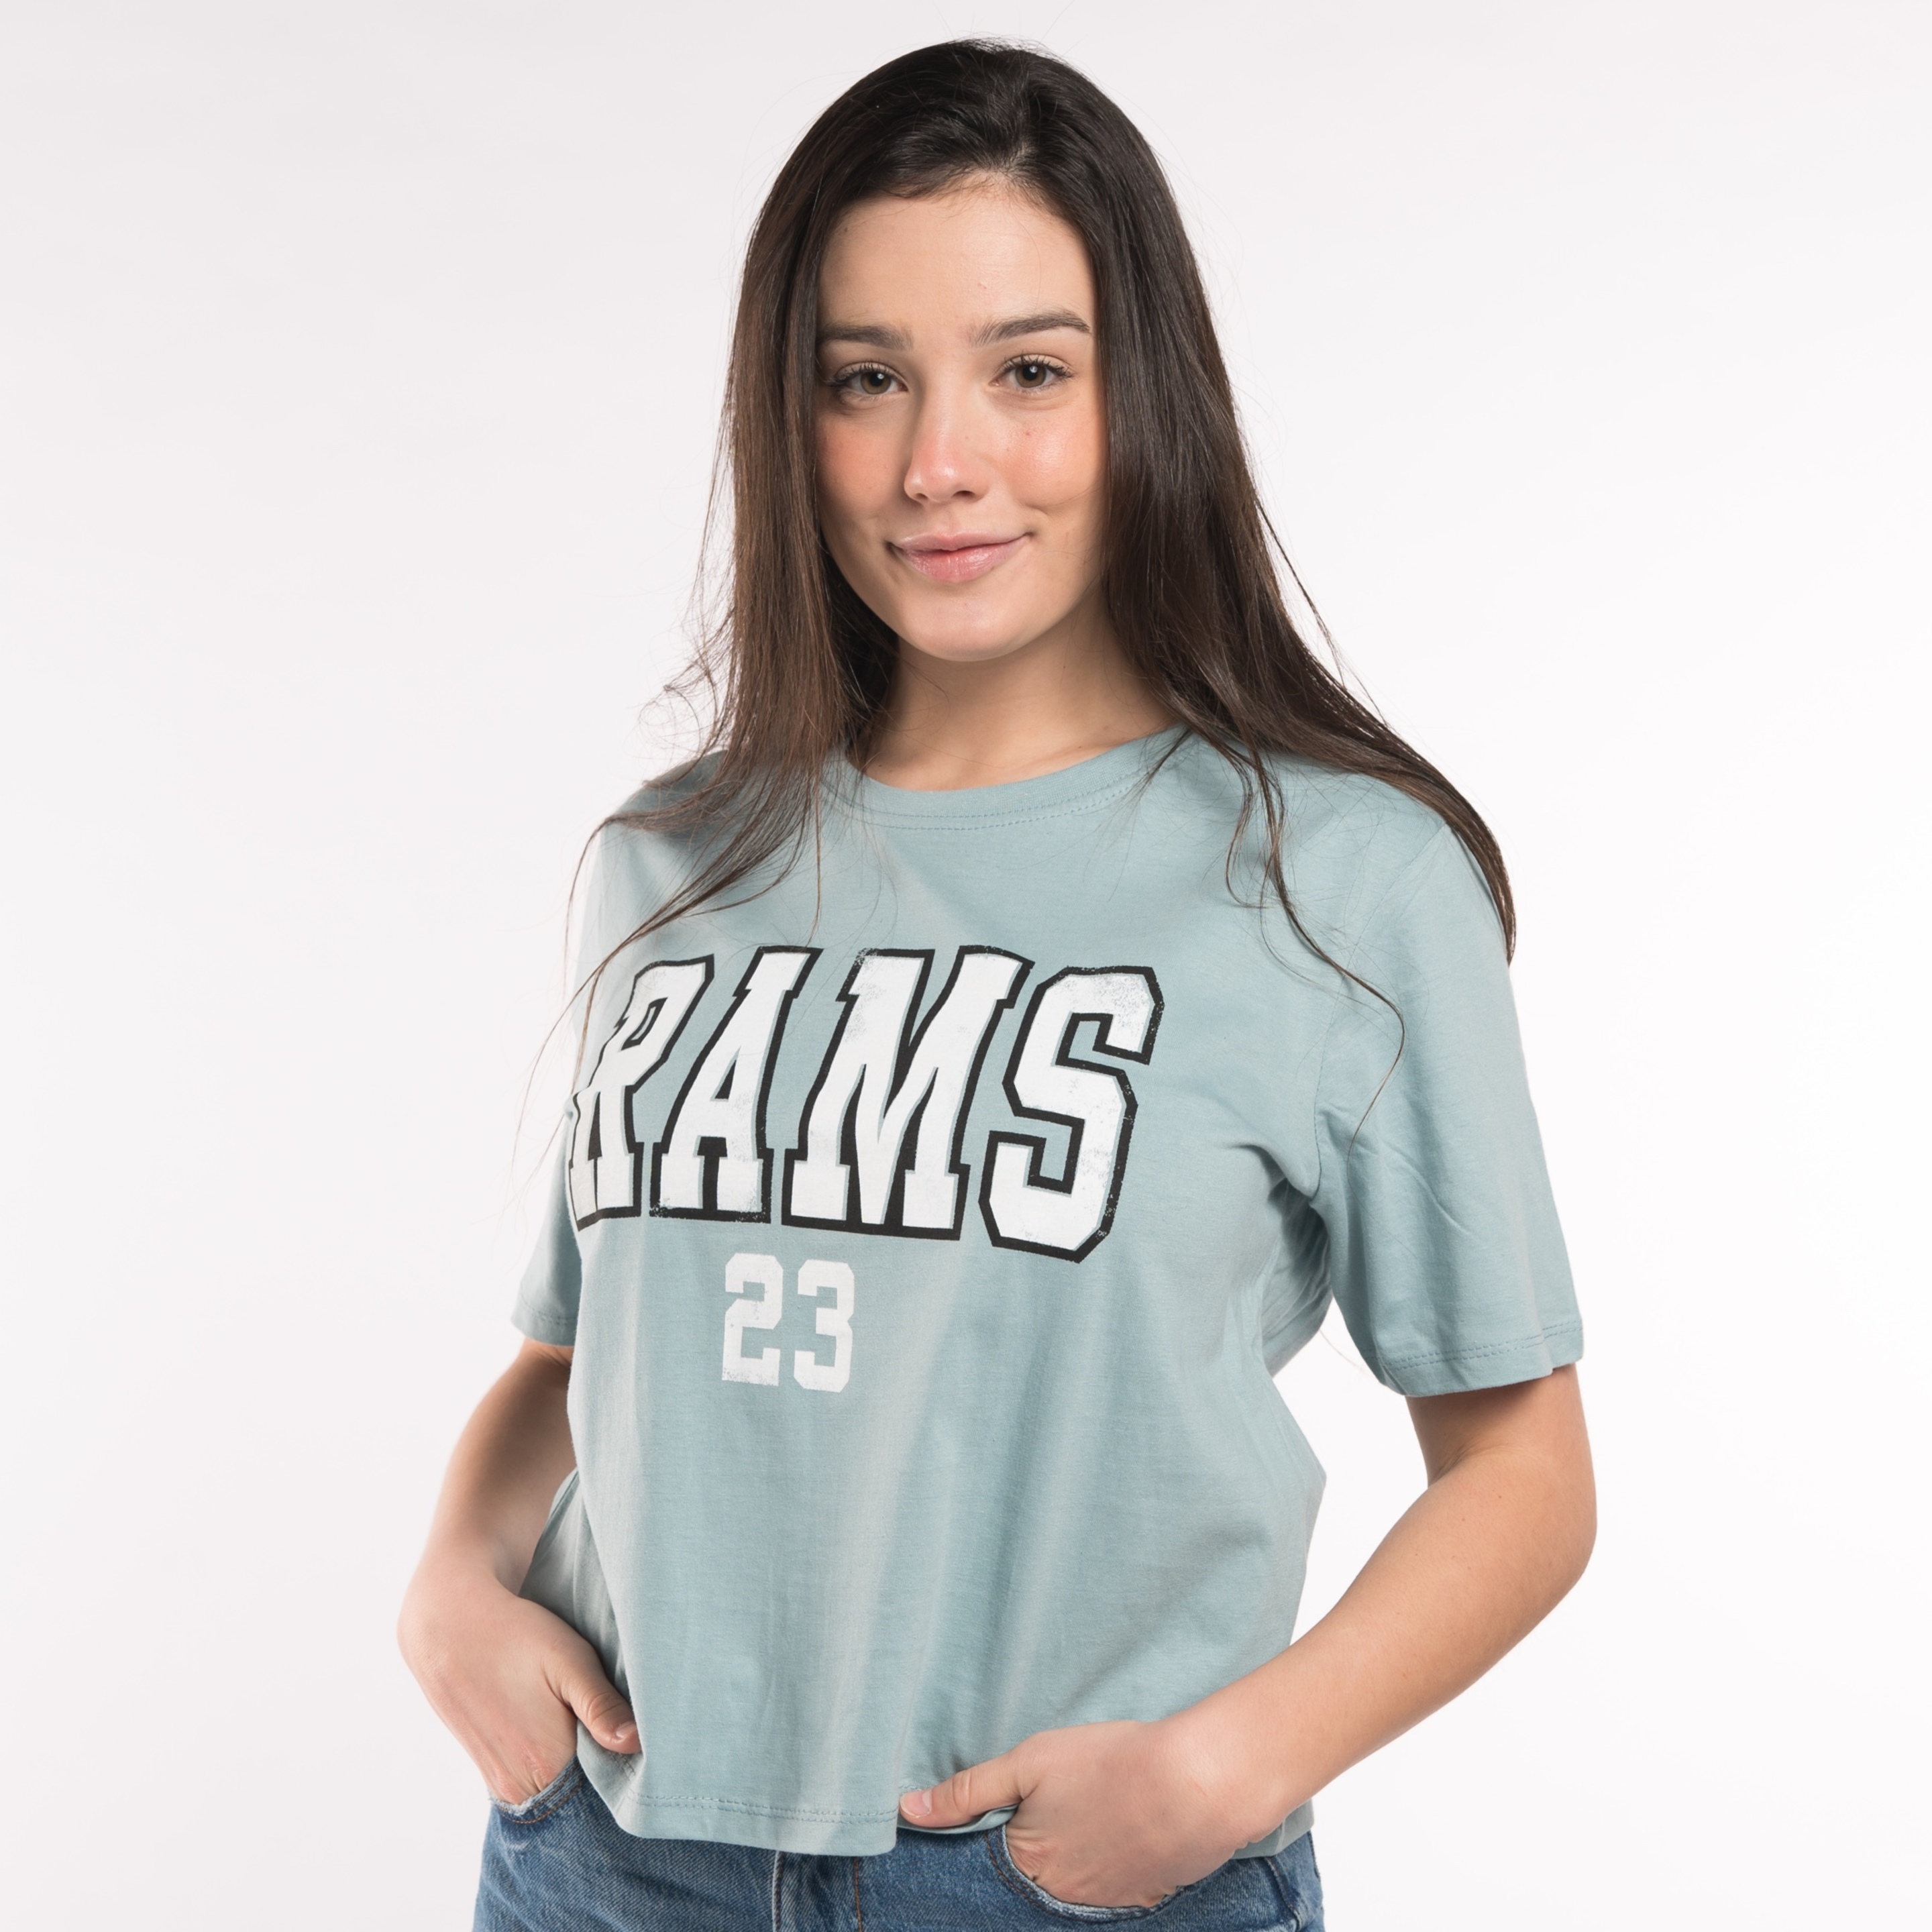 Camiseta Rams 23 Yankee Woman